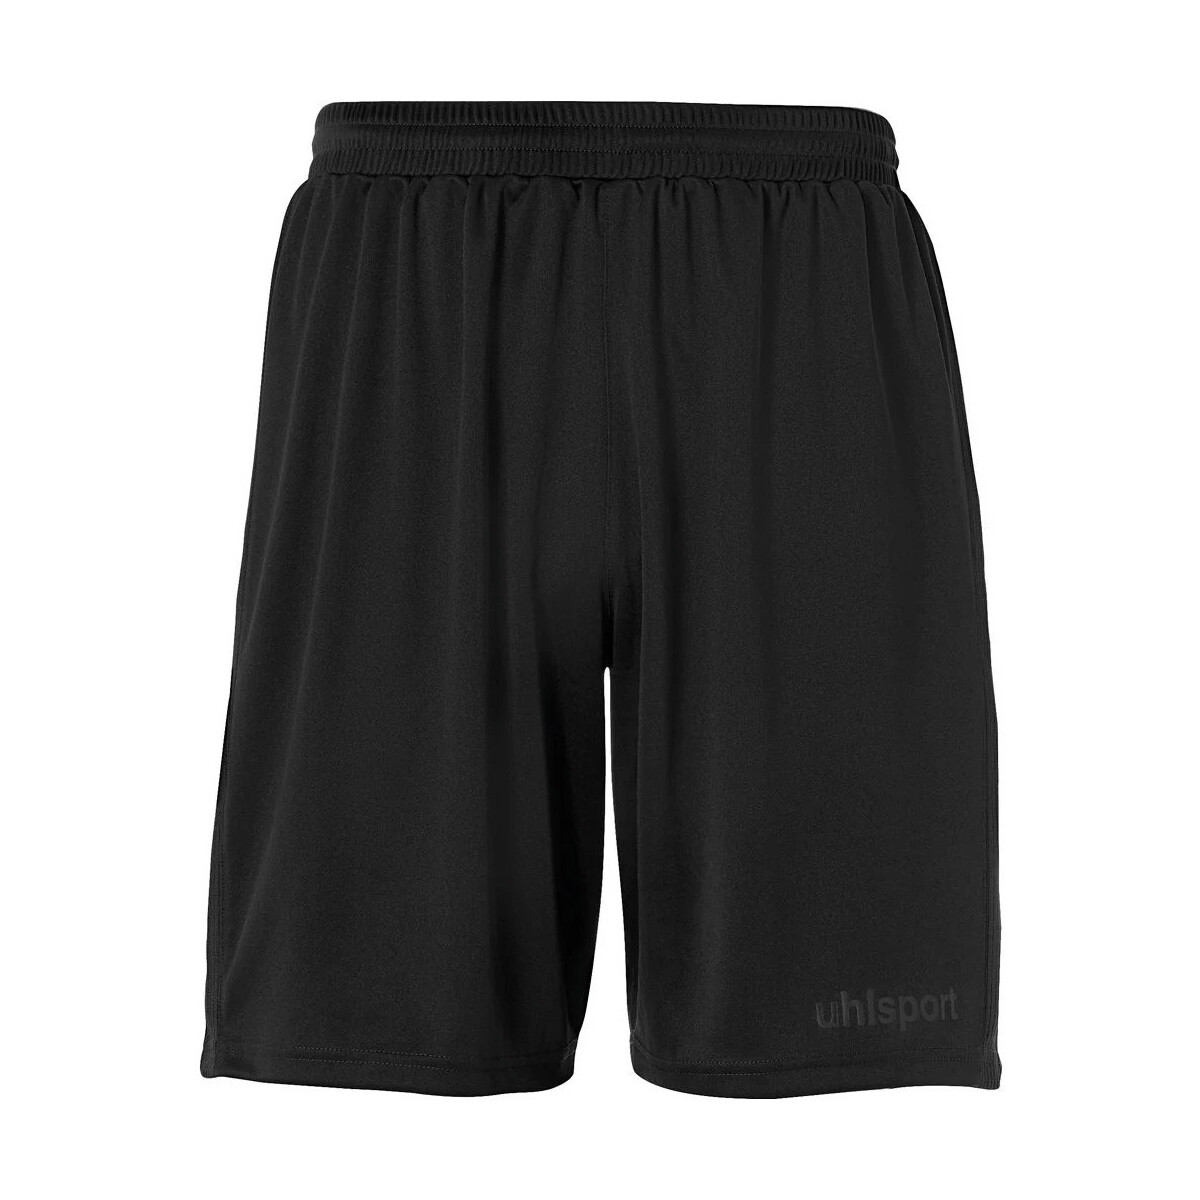 textil Shorts / Bermudas Uhlsport PERFORMANCE SHORTS Negro